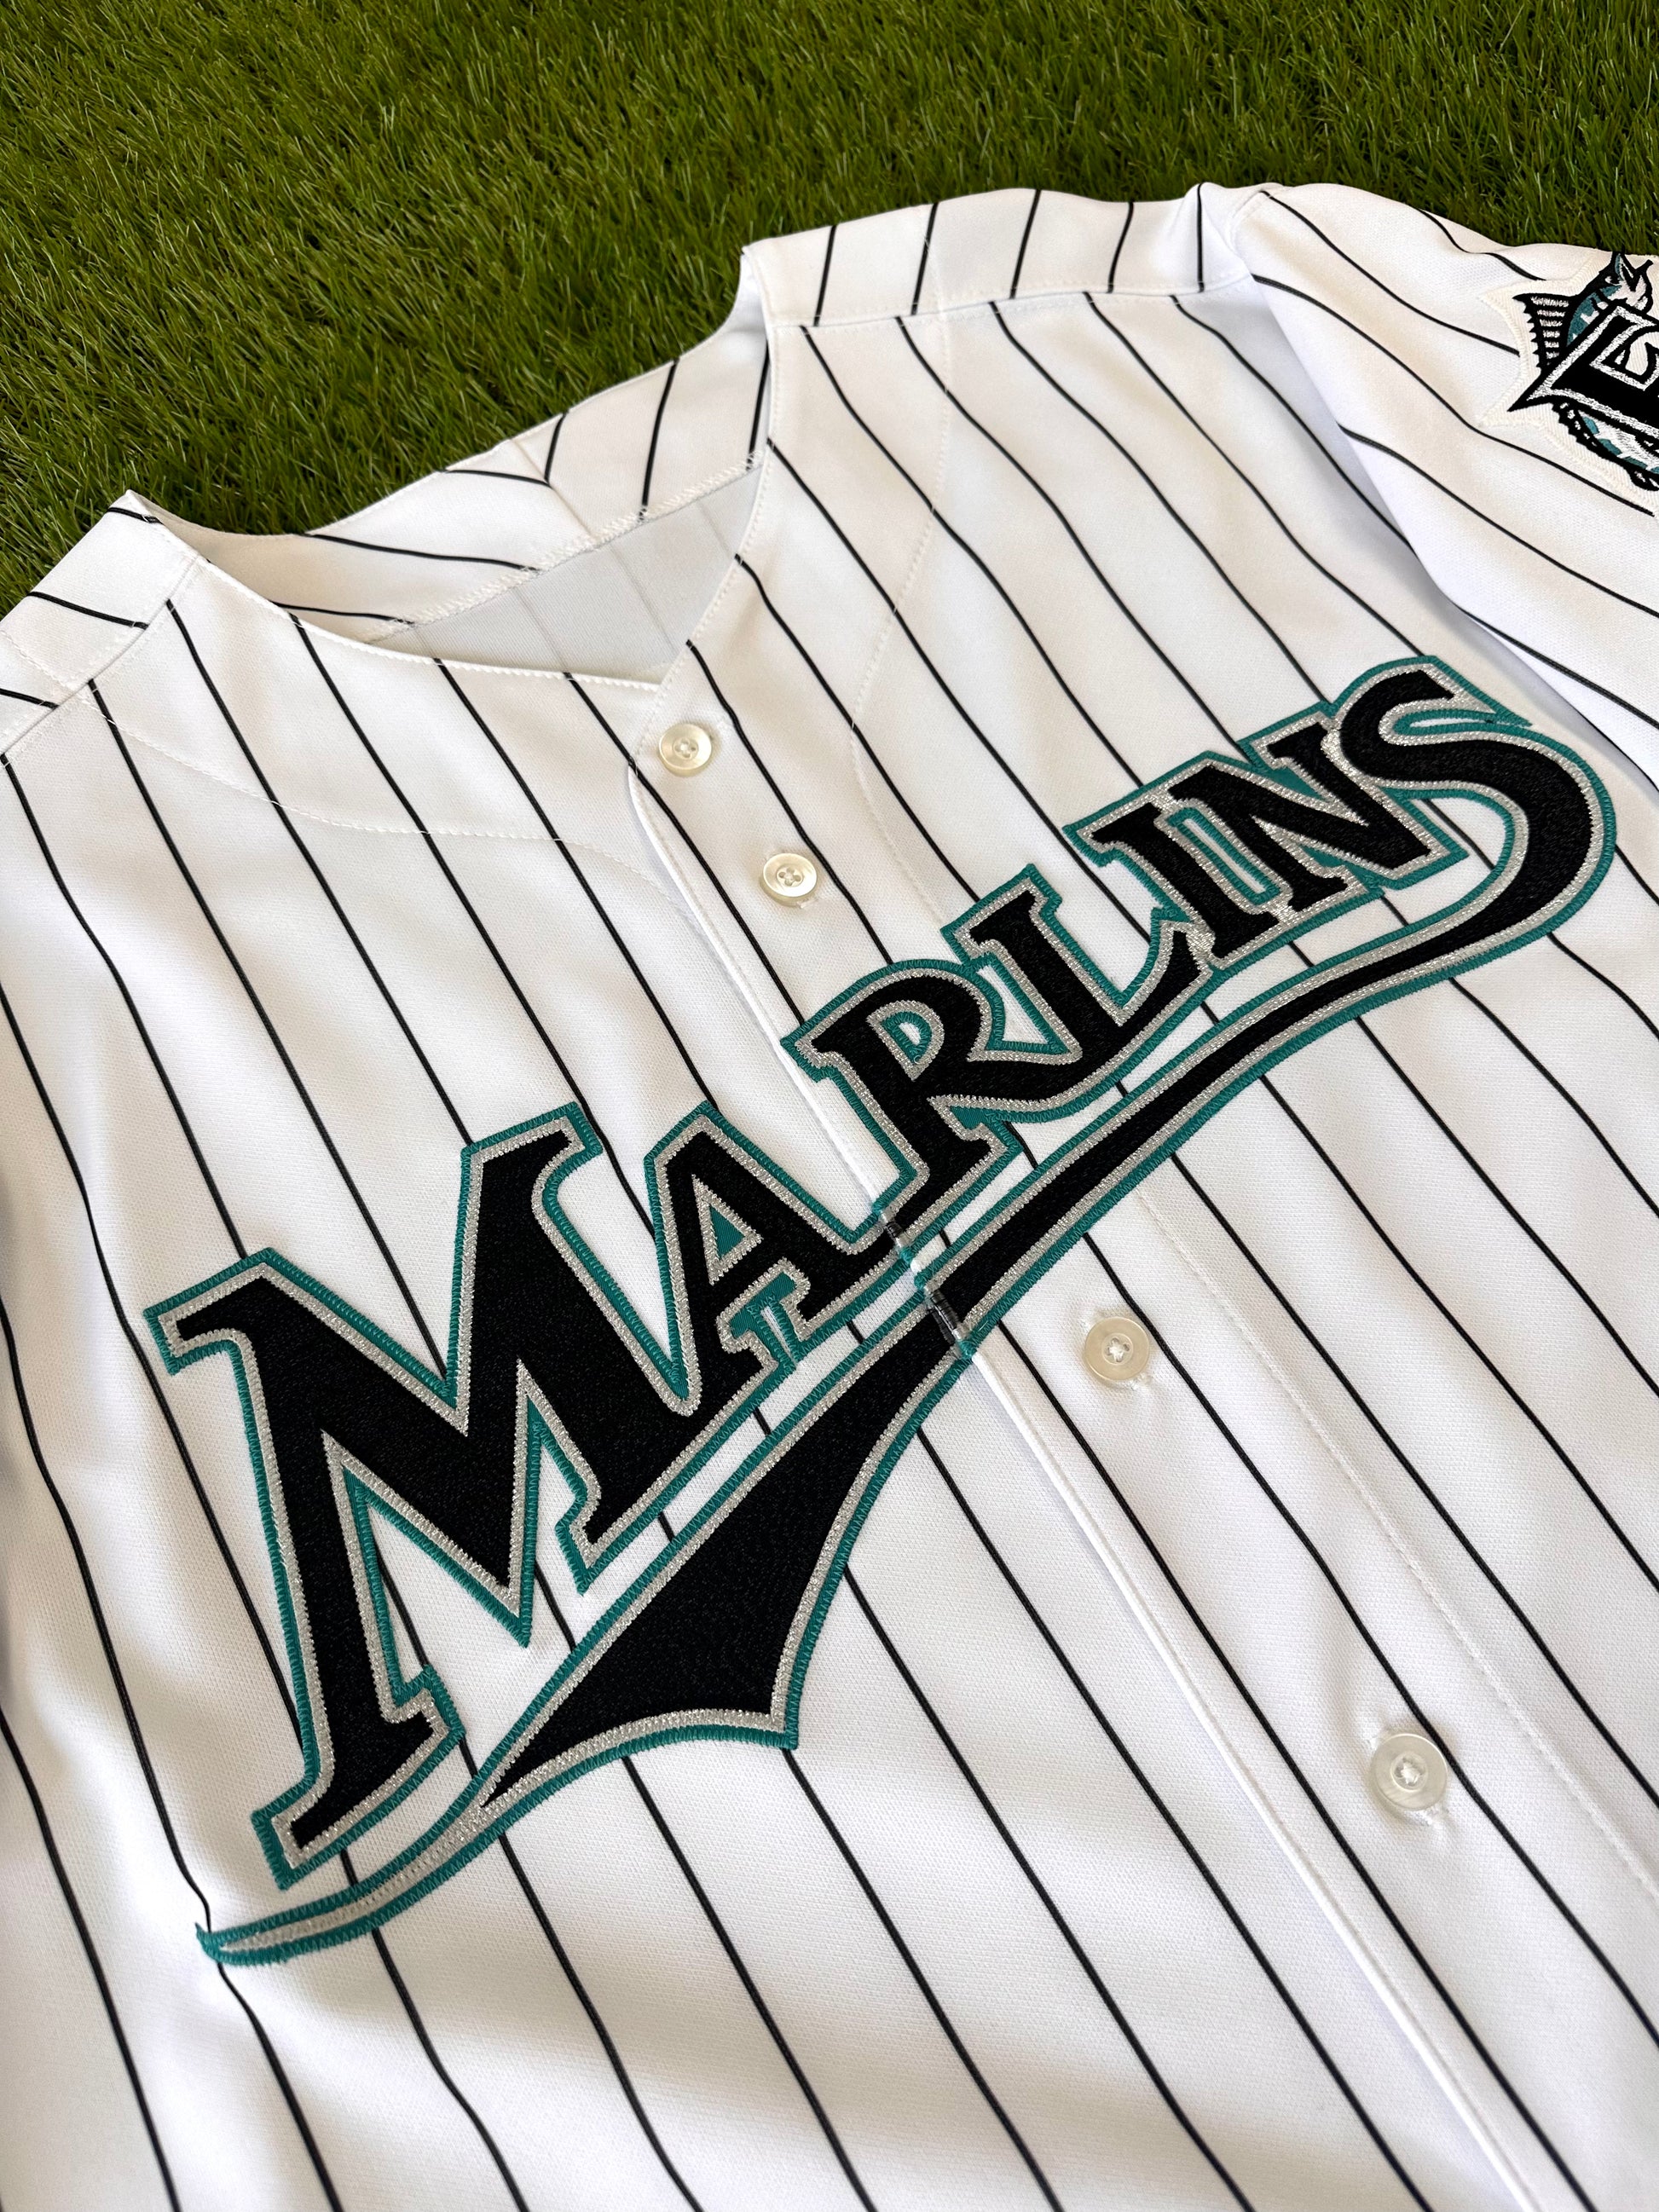 Florida Marlins MLB Fan Jerseys for sale